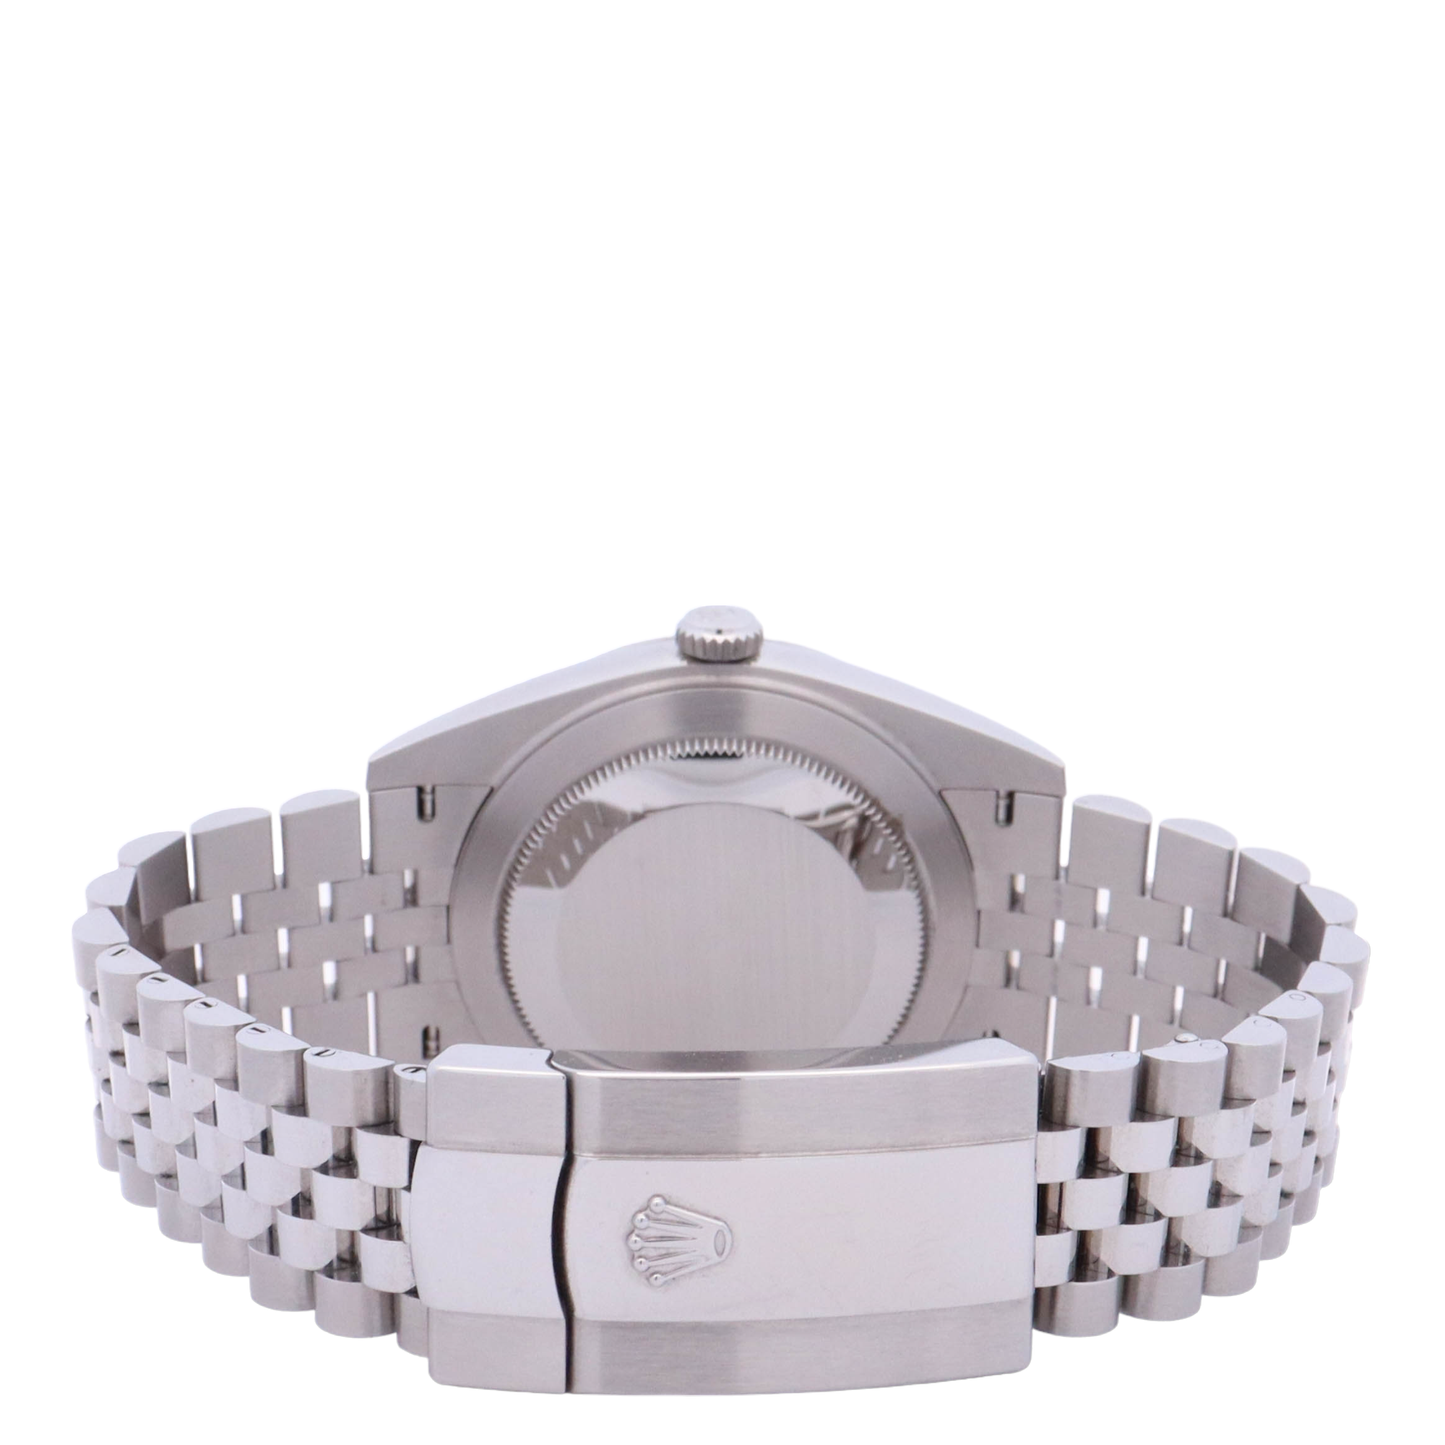 Rolex Datejust 41mm Stainless Steel Wimbledon Dial Watch Reference# 126300 - Happy Jewelers Fine Jewelry Lifetime Warranty